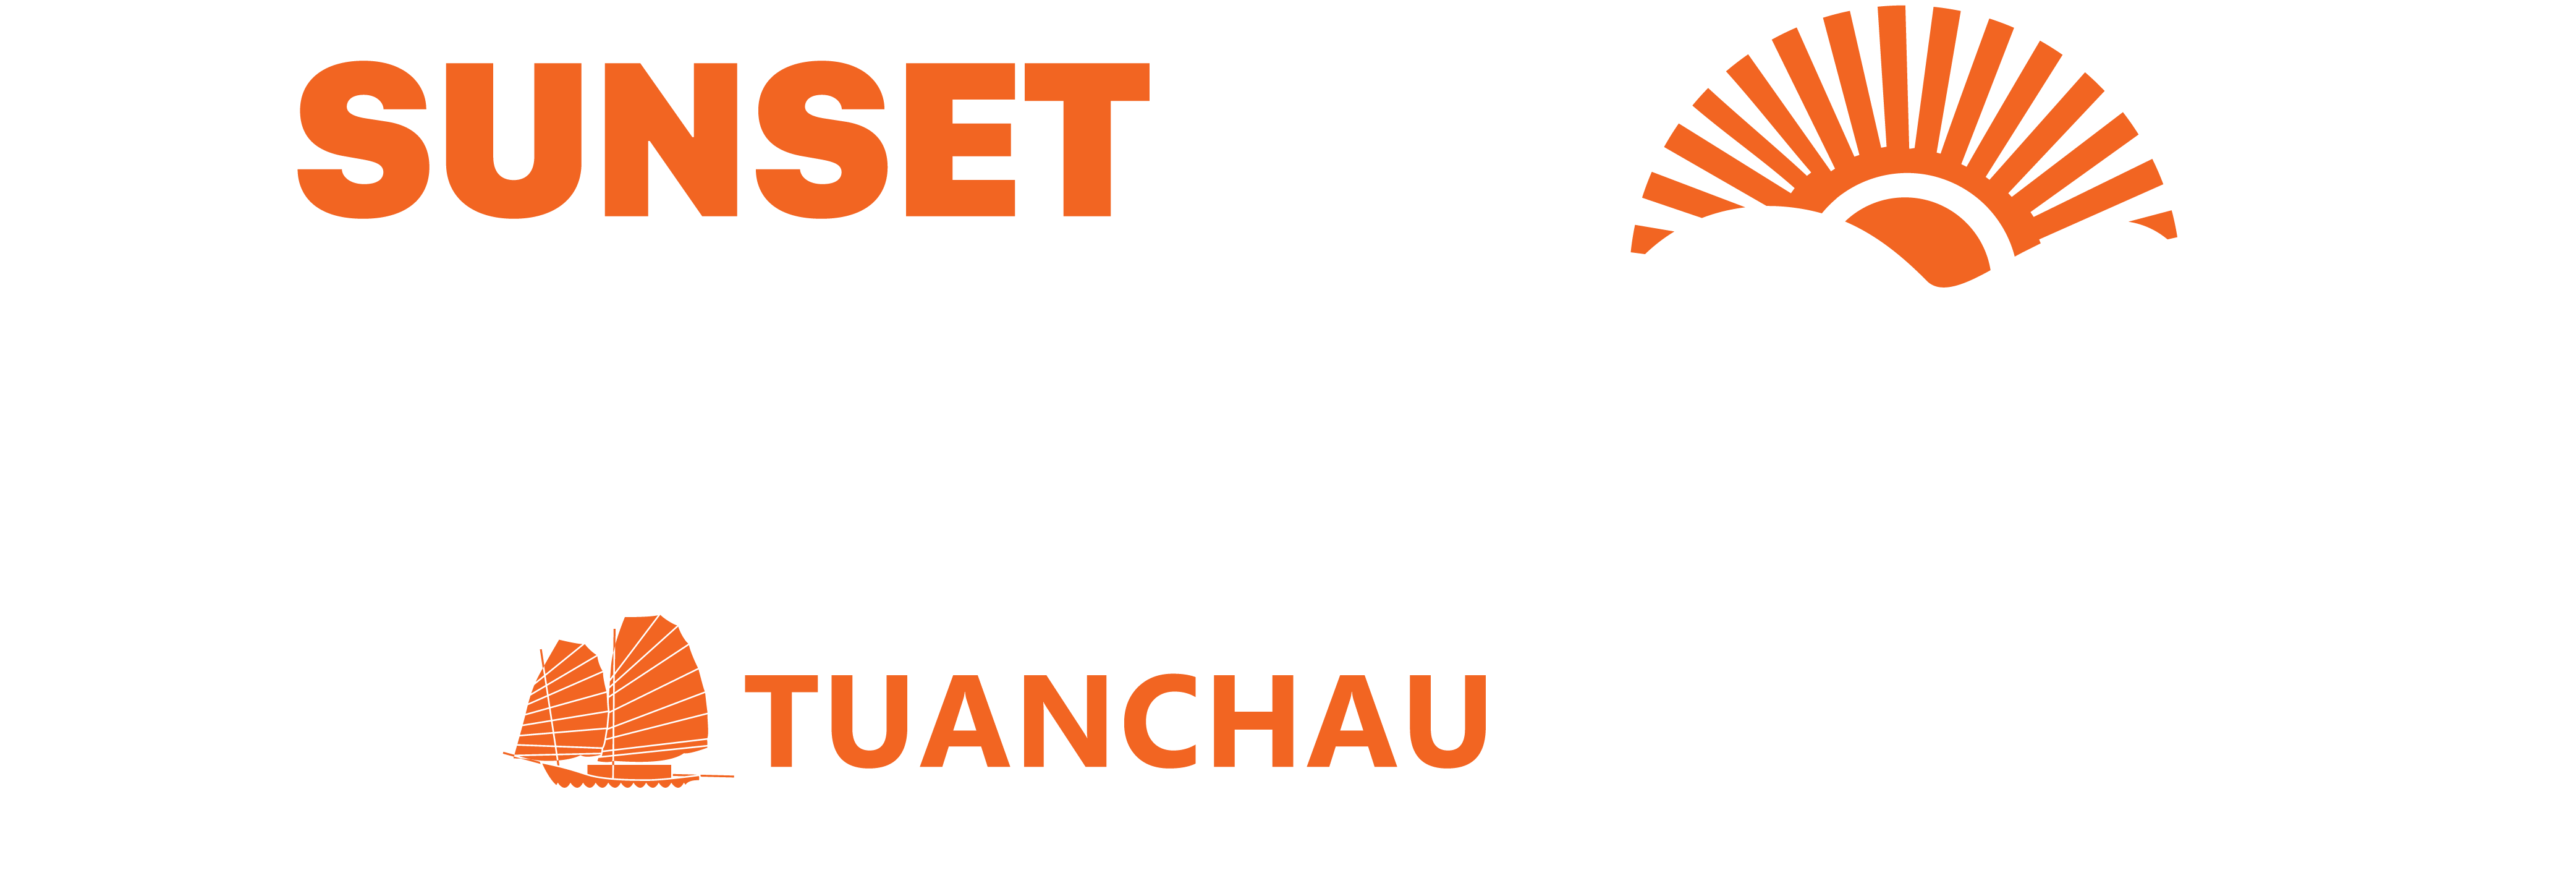 Sunset Bay Triathlon 2019